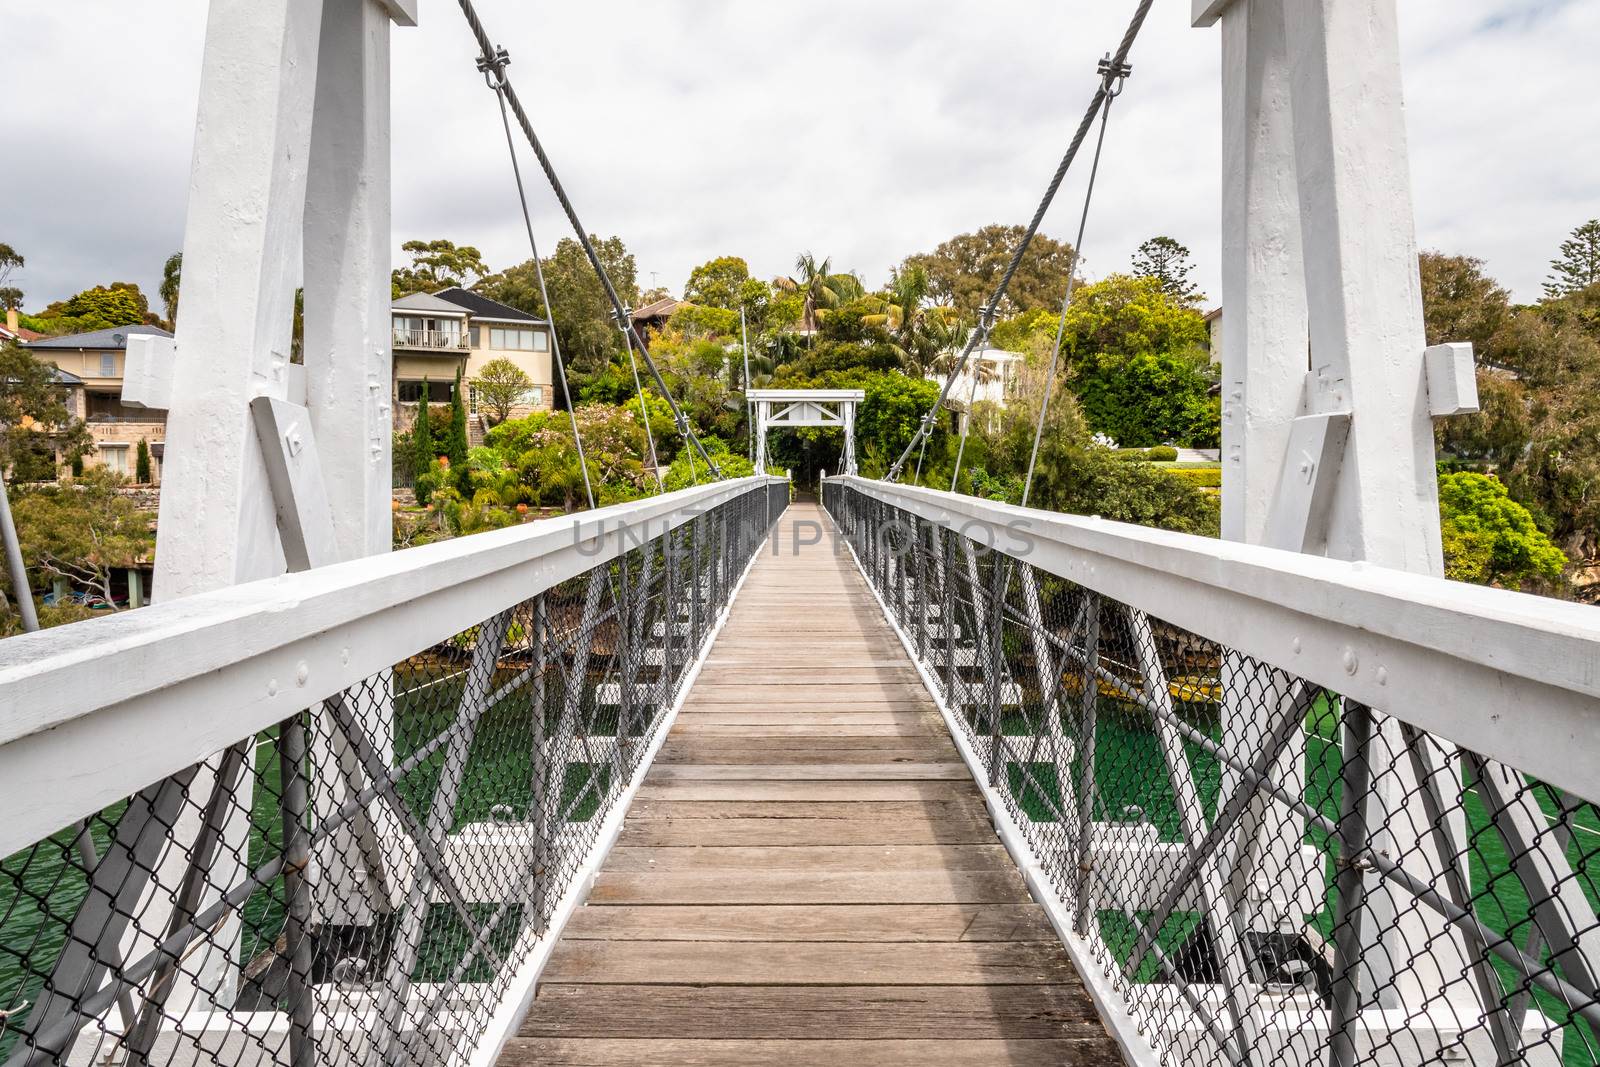 Parsley bay white foot bridge in Sydney, NSW Australia.